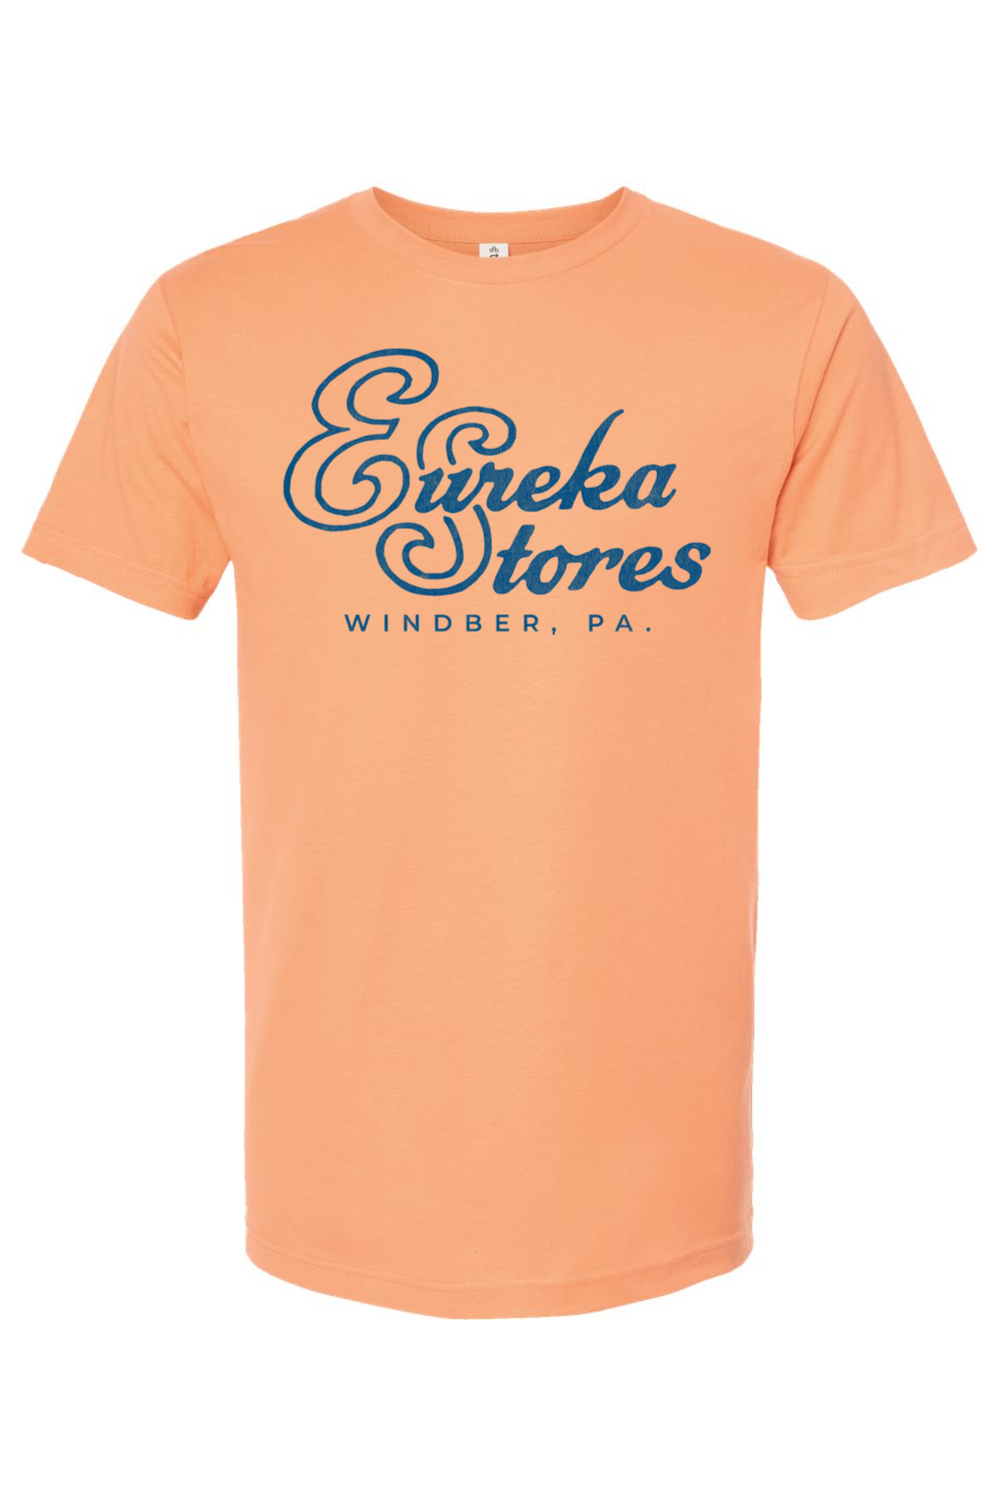 Eureka Stores - Windber, PA - Yinzylvania